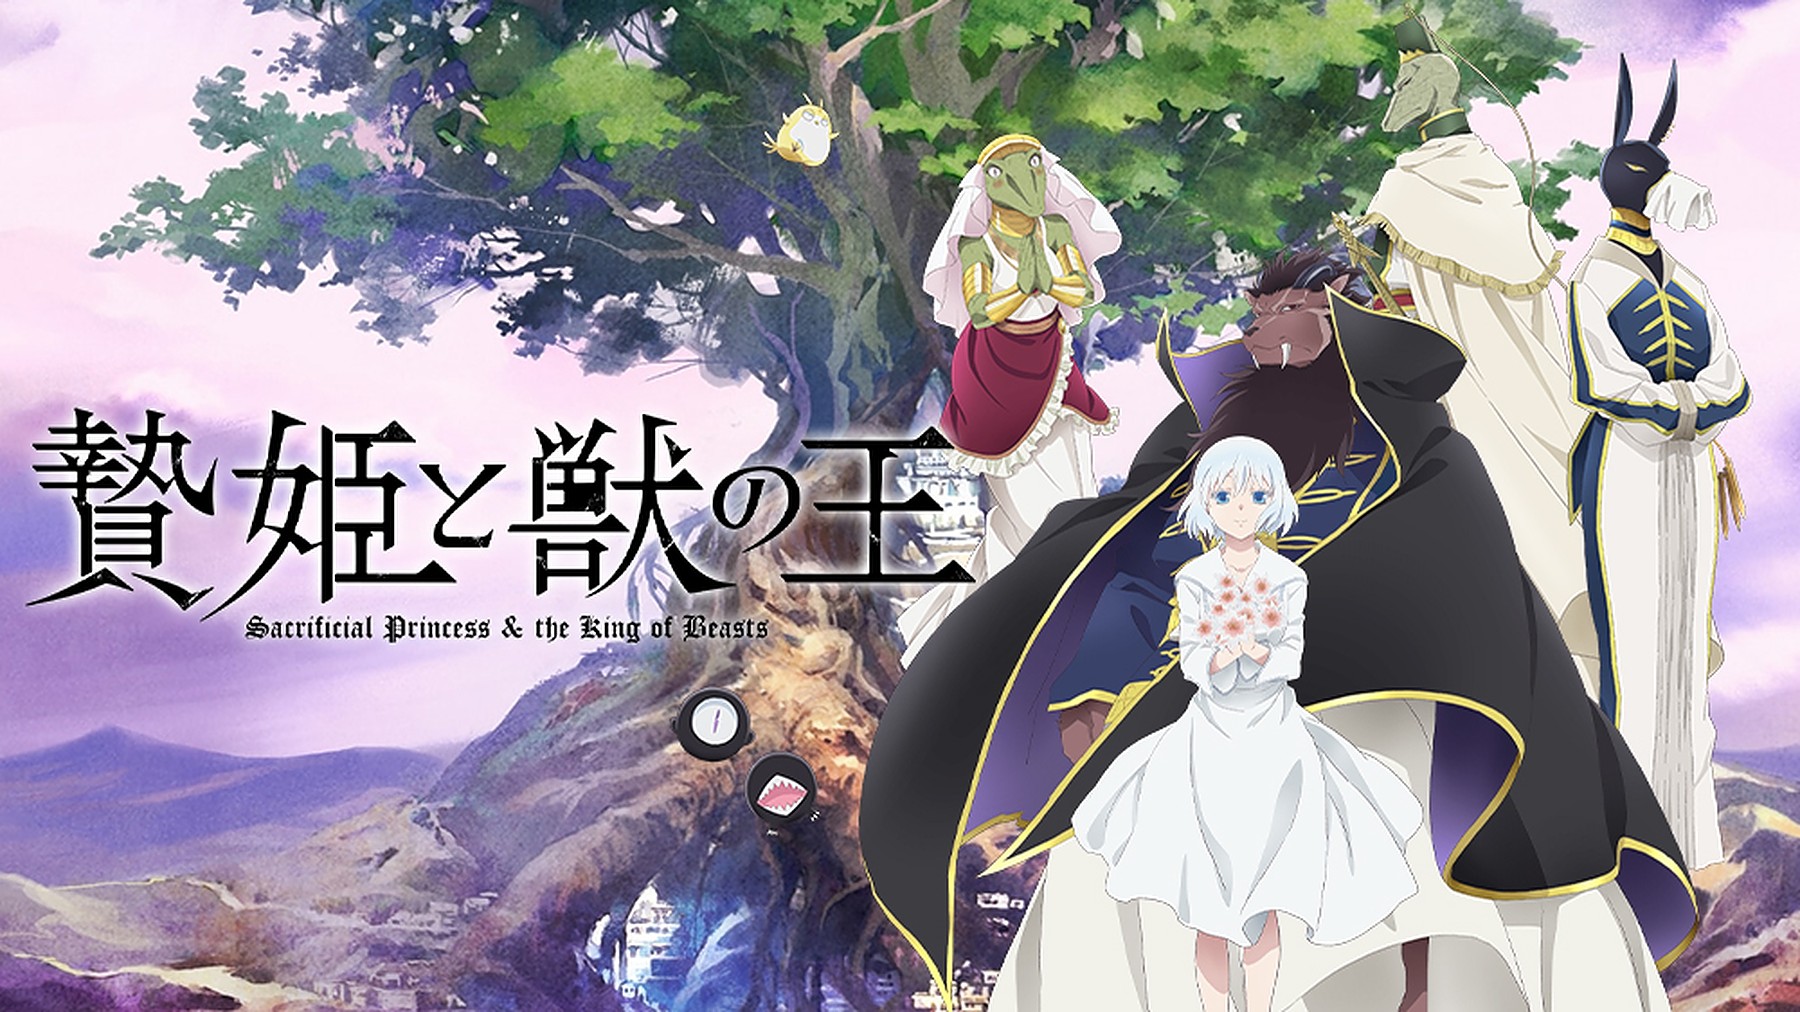 Sacrificial Princess & the King of Beasts Anime Reveals Teaser Promo Video,  New Visual - News - Anime News Network